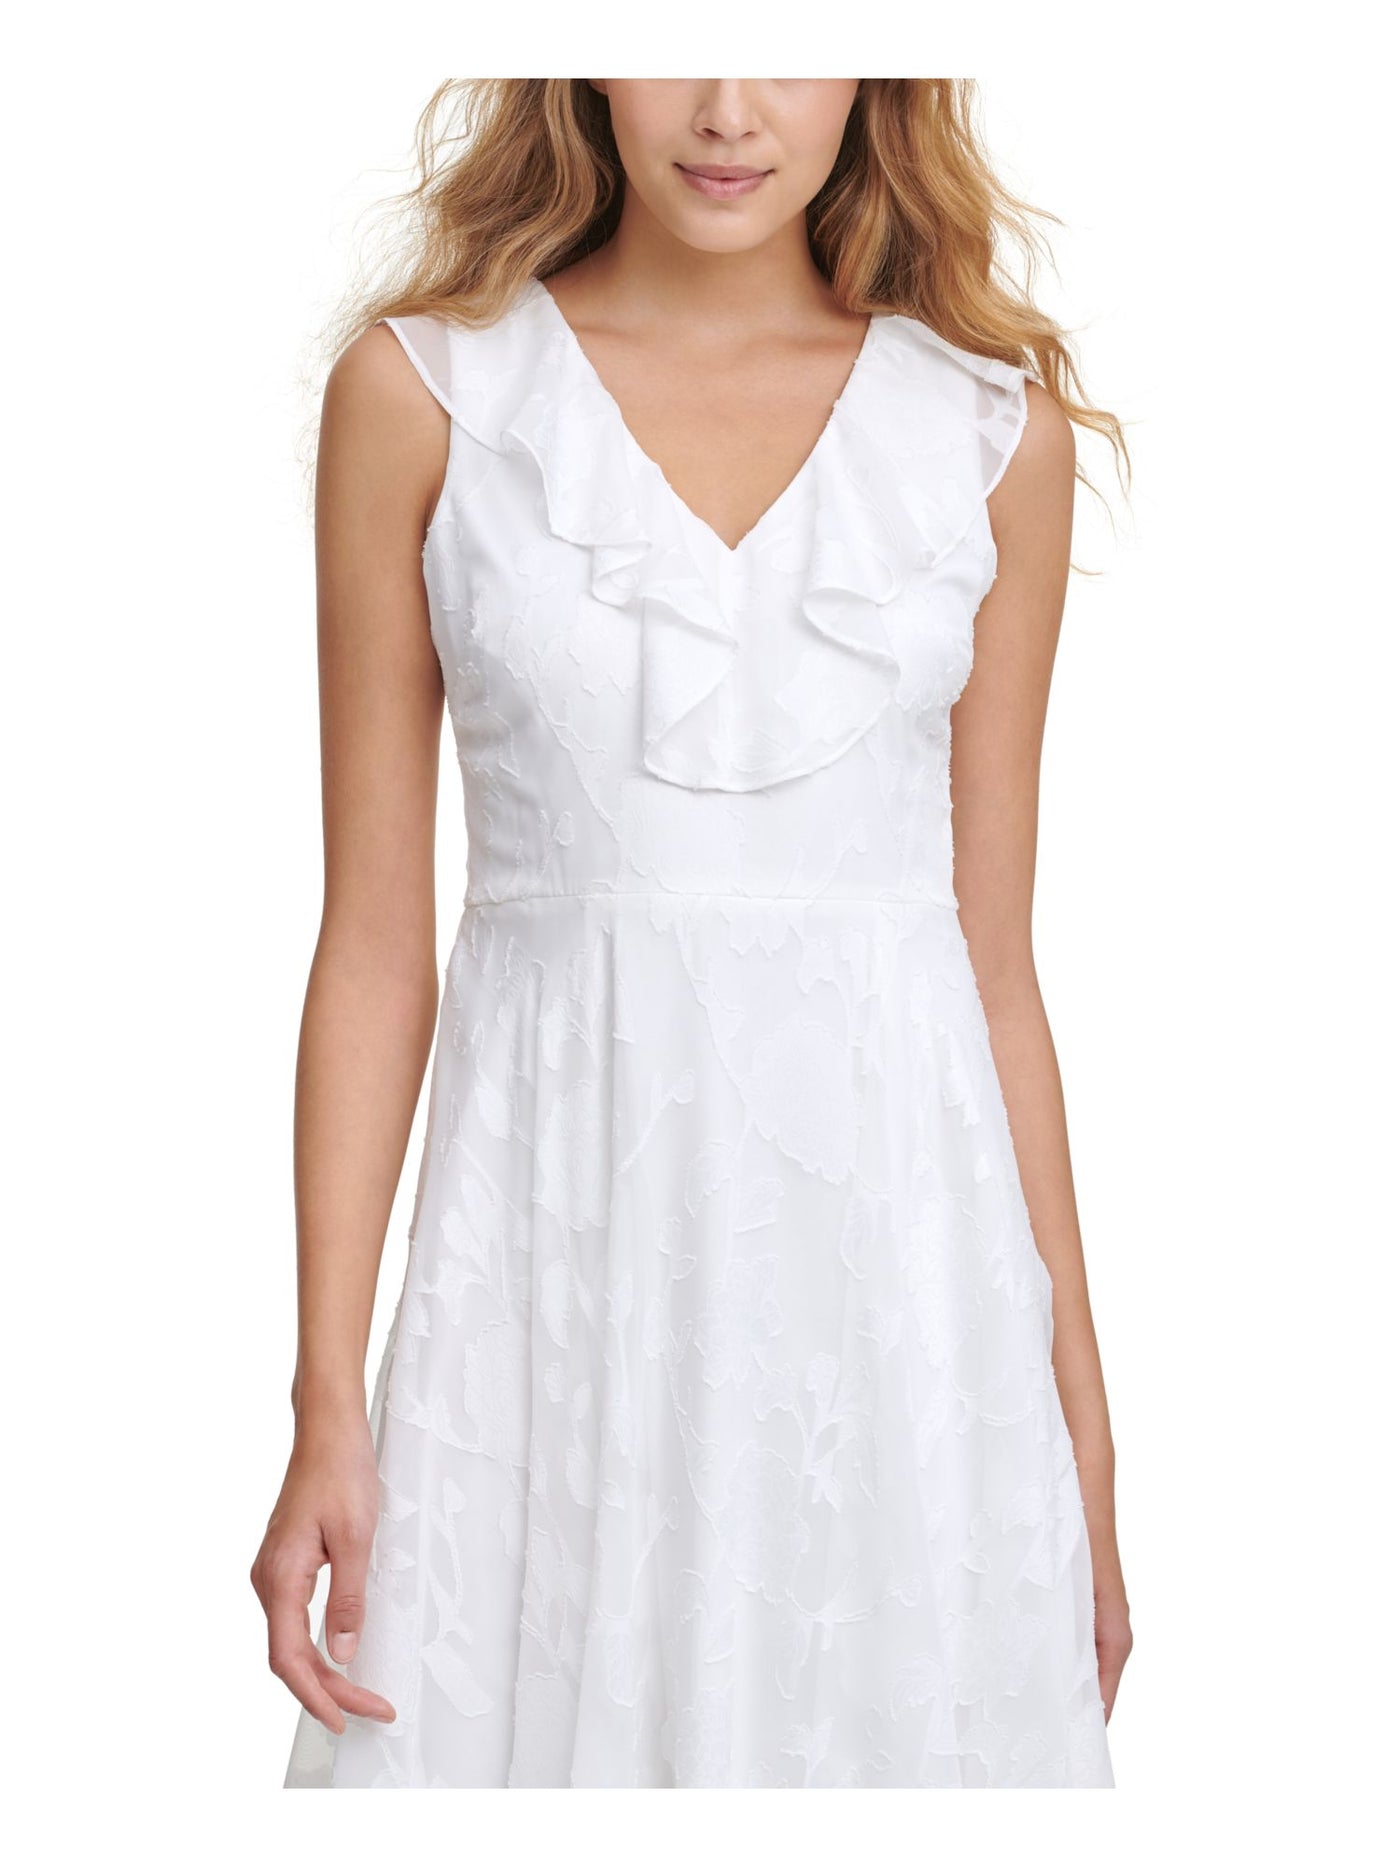 KENSIE DRESSES Womens White Ruffled Zippered Handkerchief Hem Floral Sleeveless V Neck Midi Evening Fit + Flare Dress 6